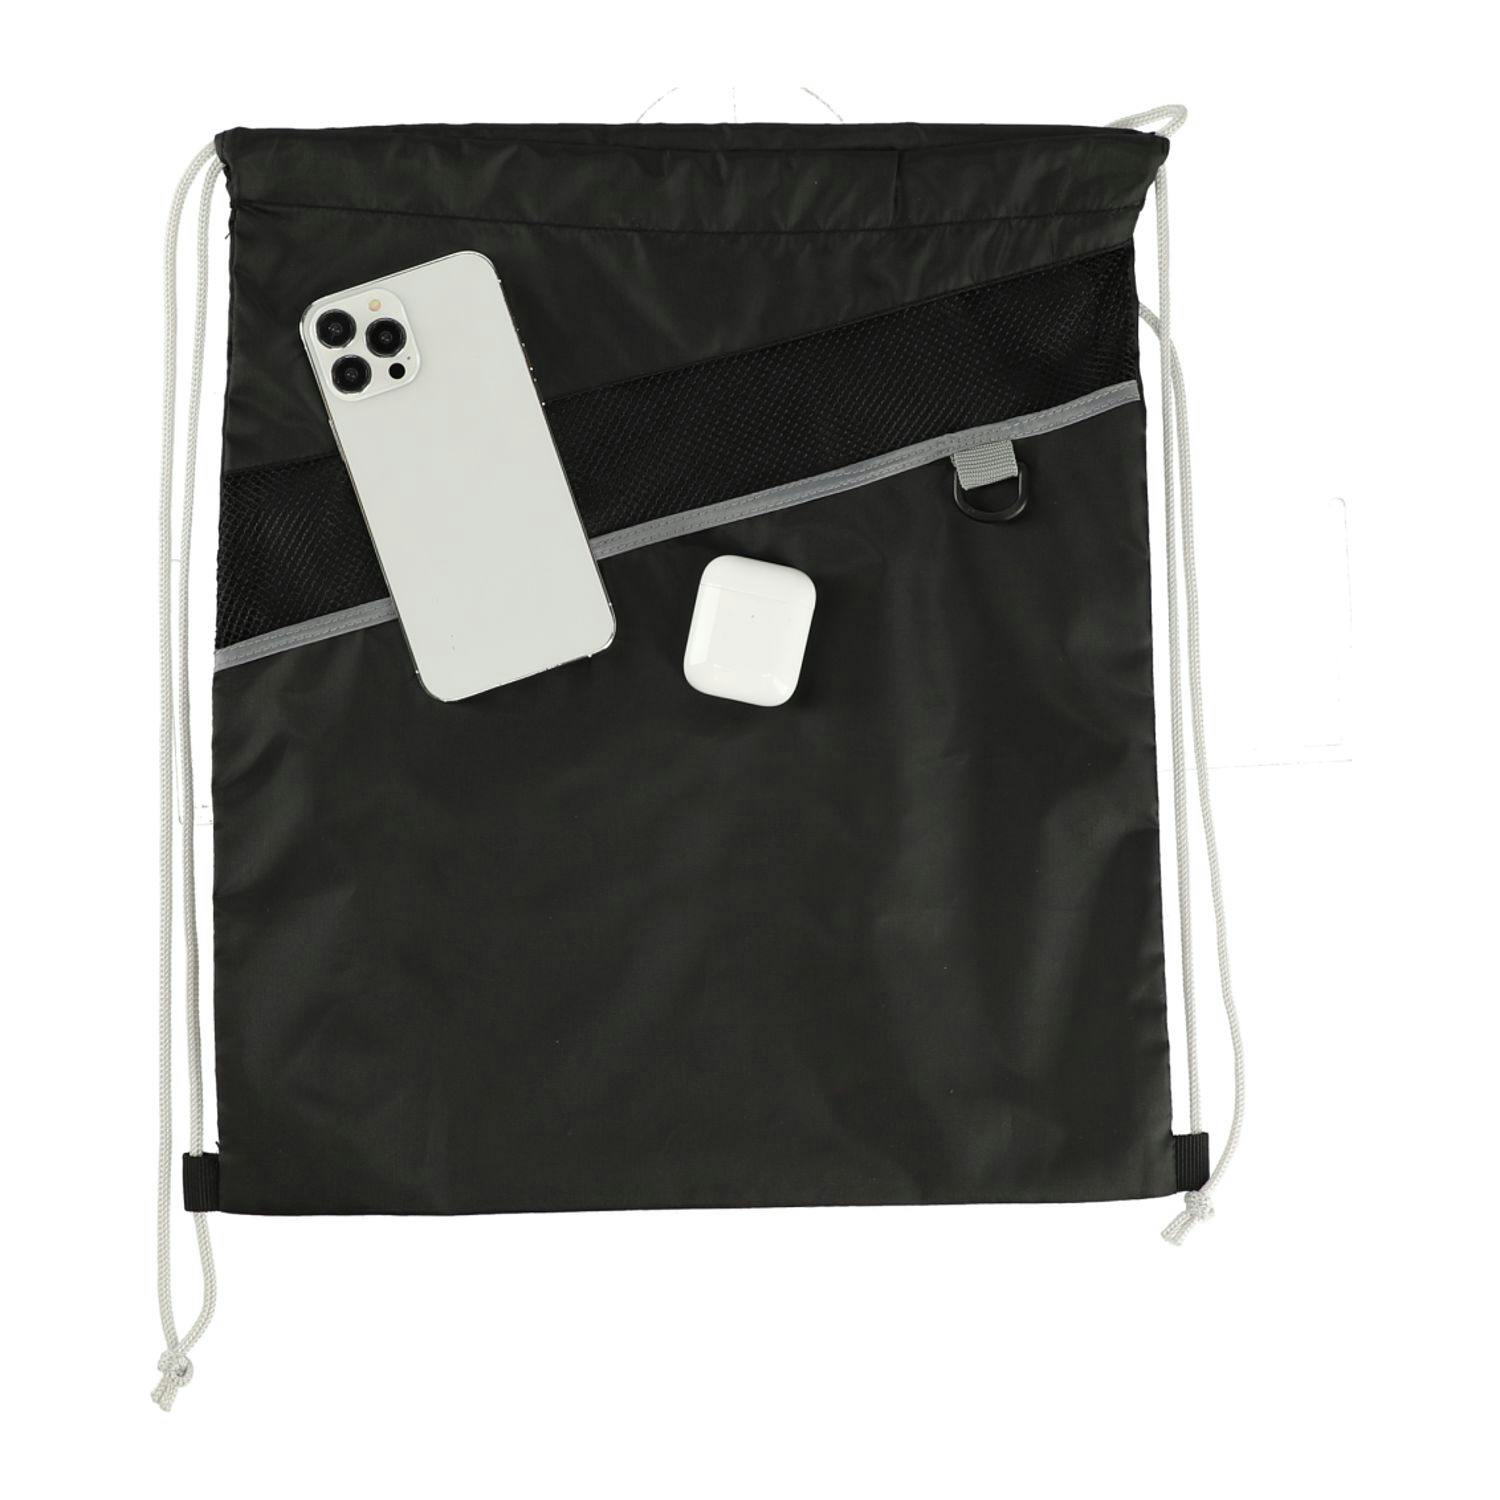 Combo Recycled Drawstring Bag - additional Image 1